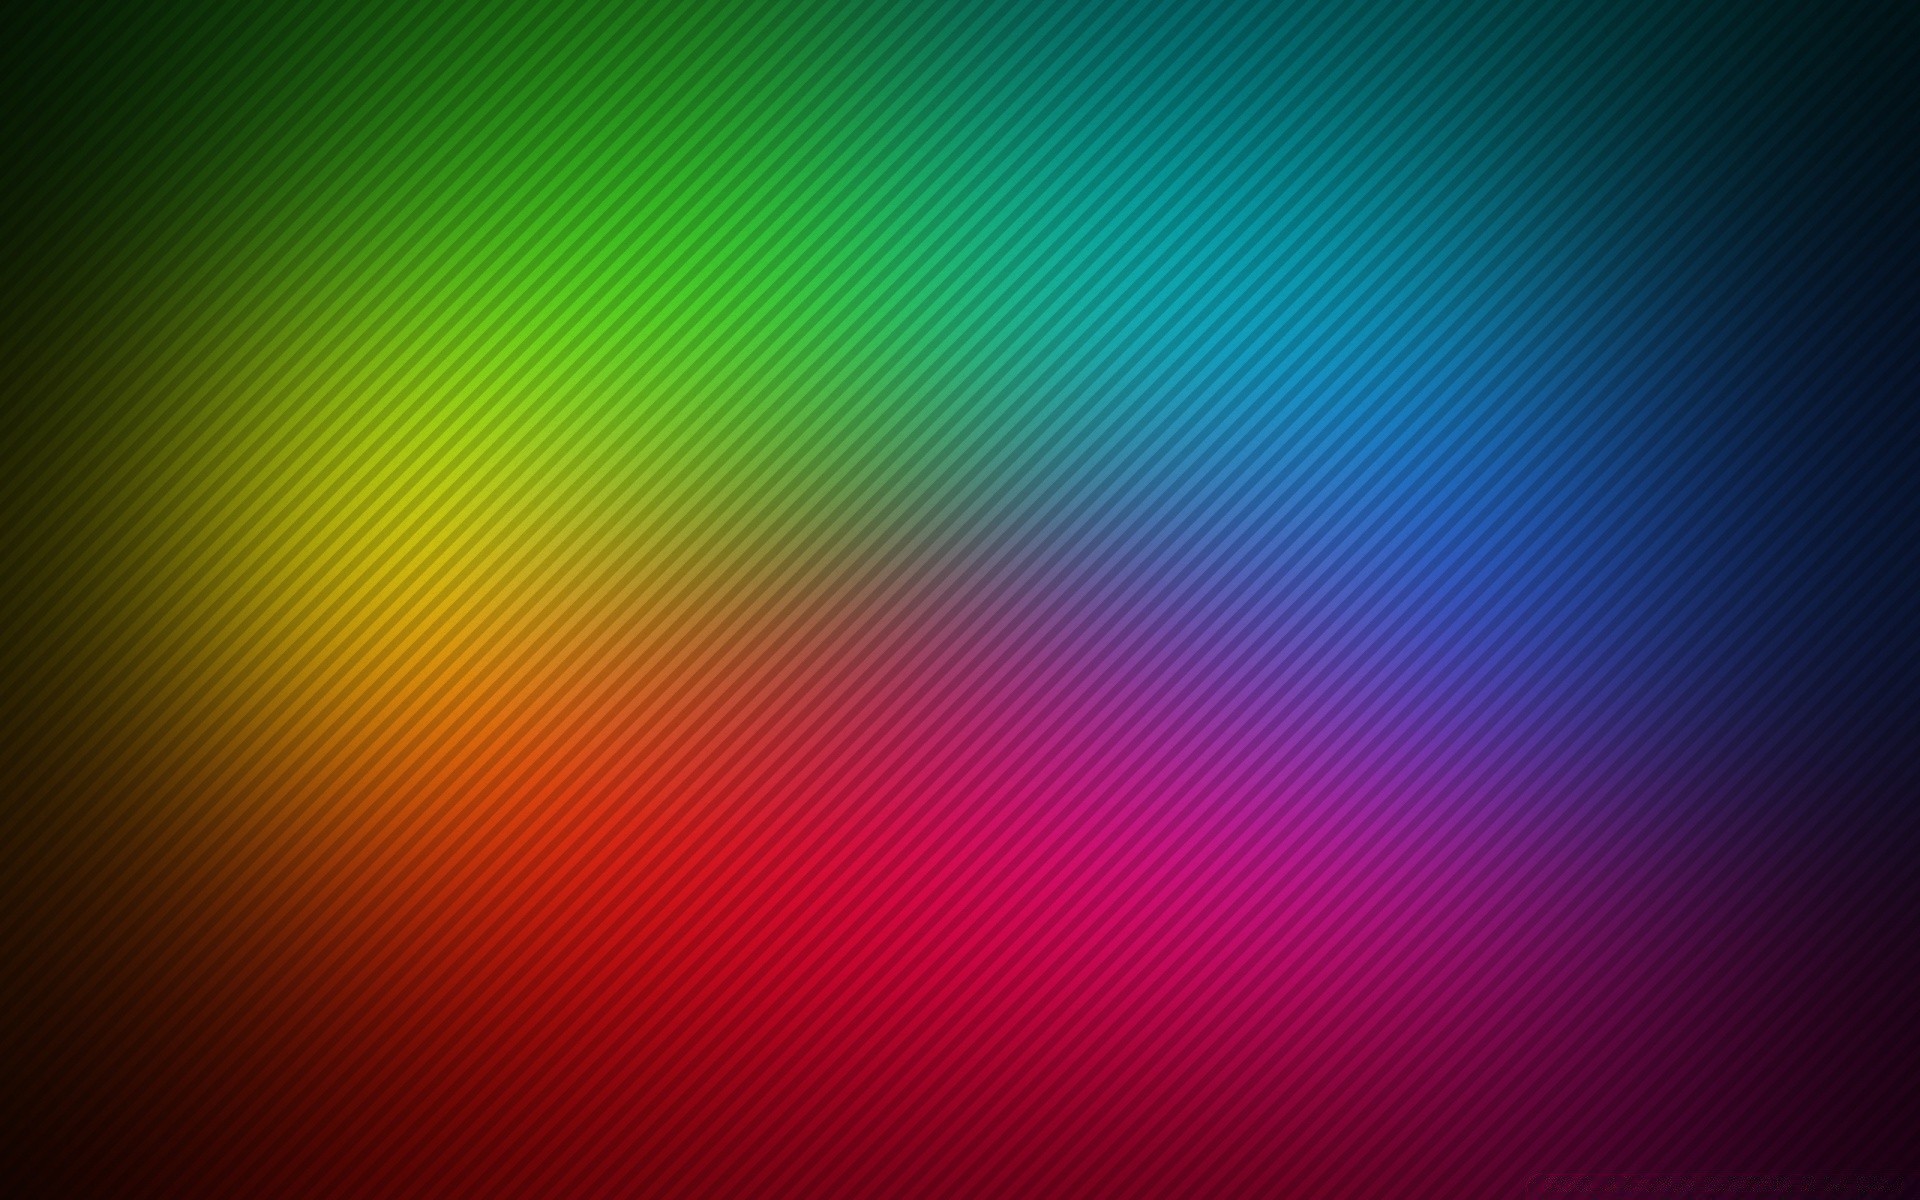 rainbow abstract wallpaper art design desktop background pattern graphic texture light illustration retro